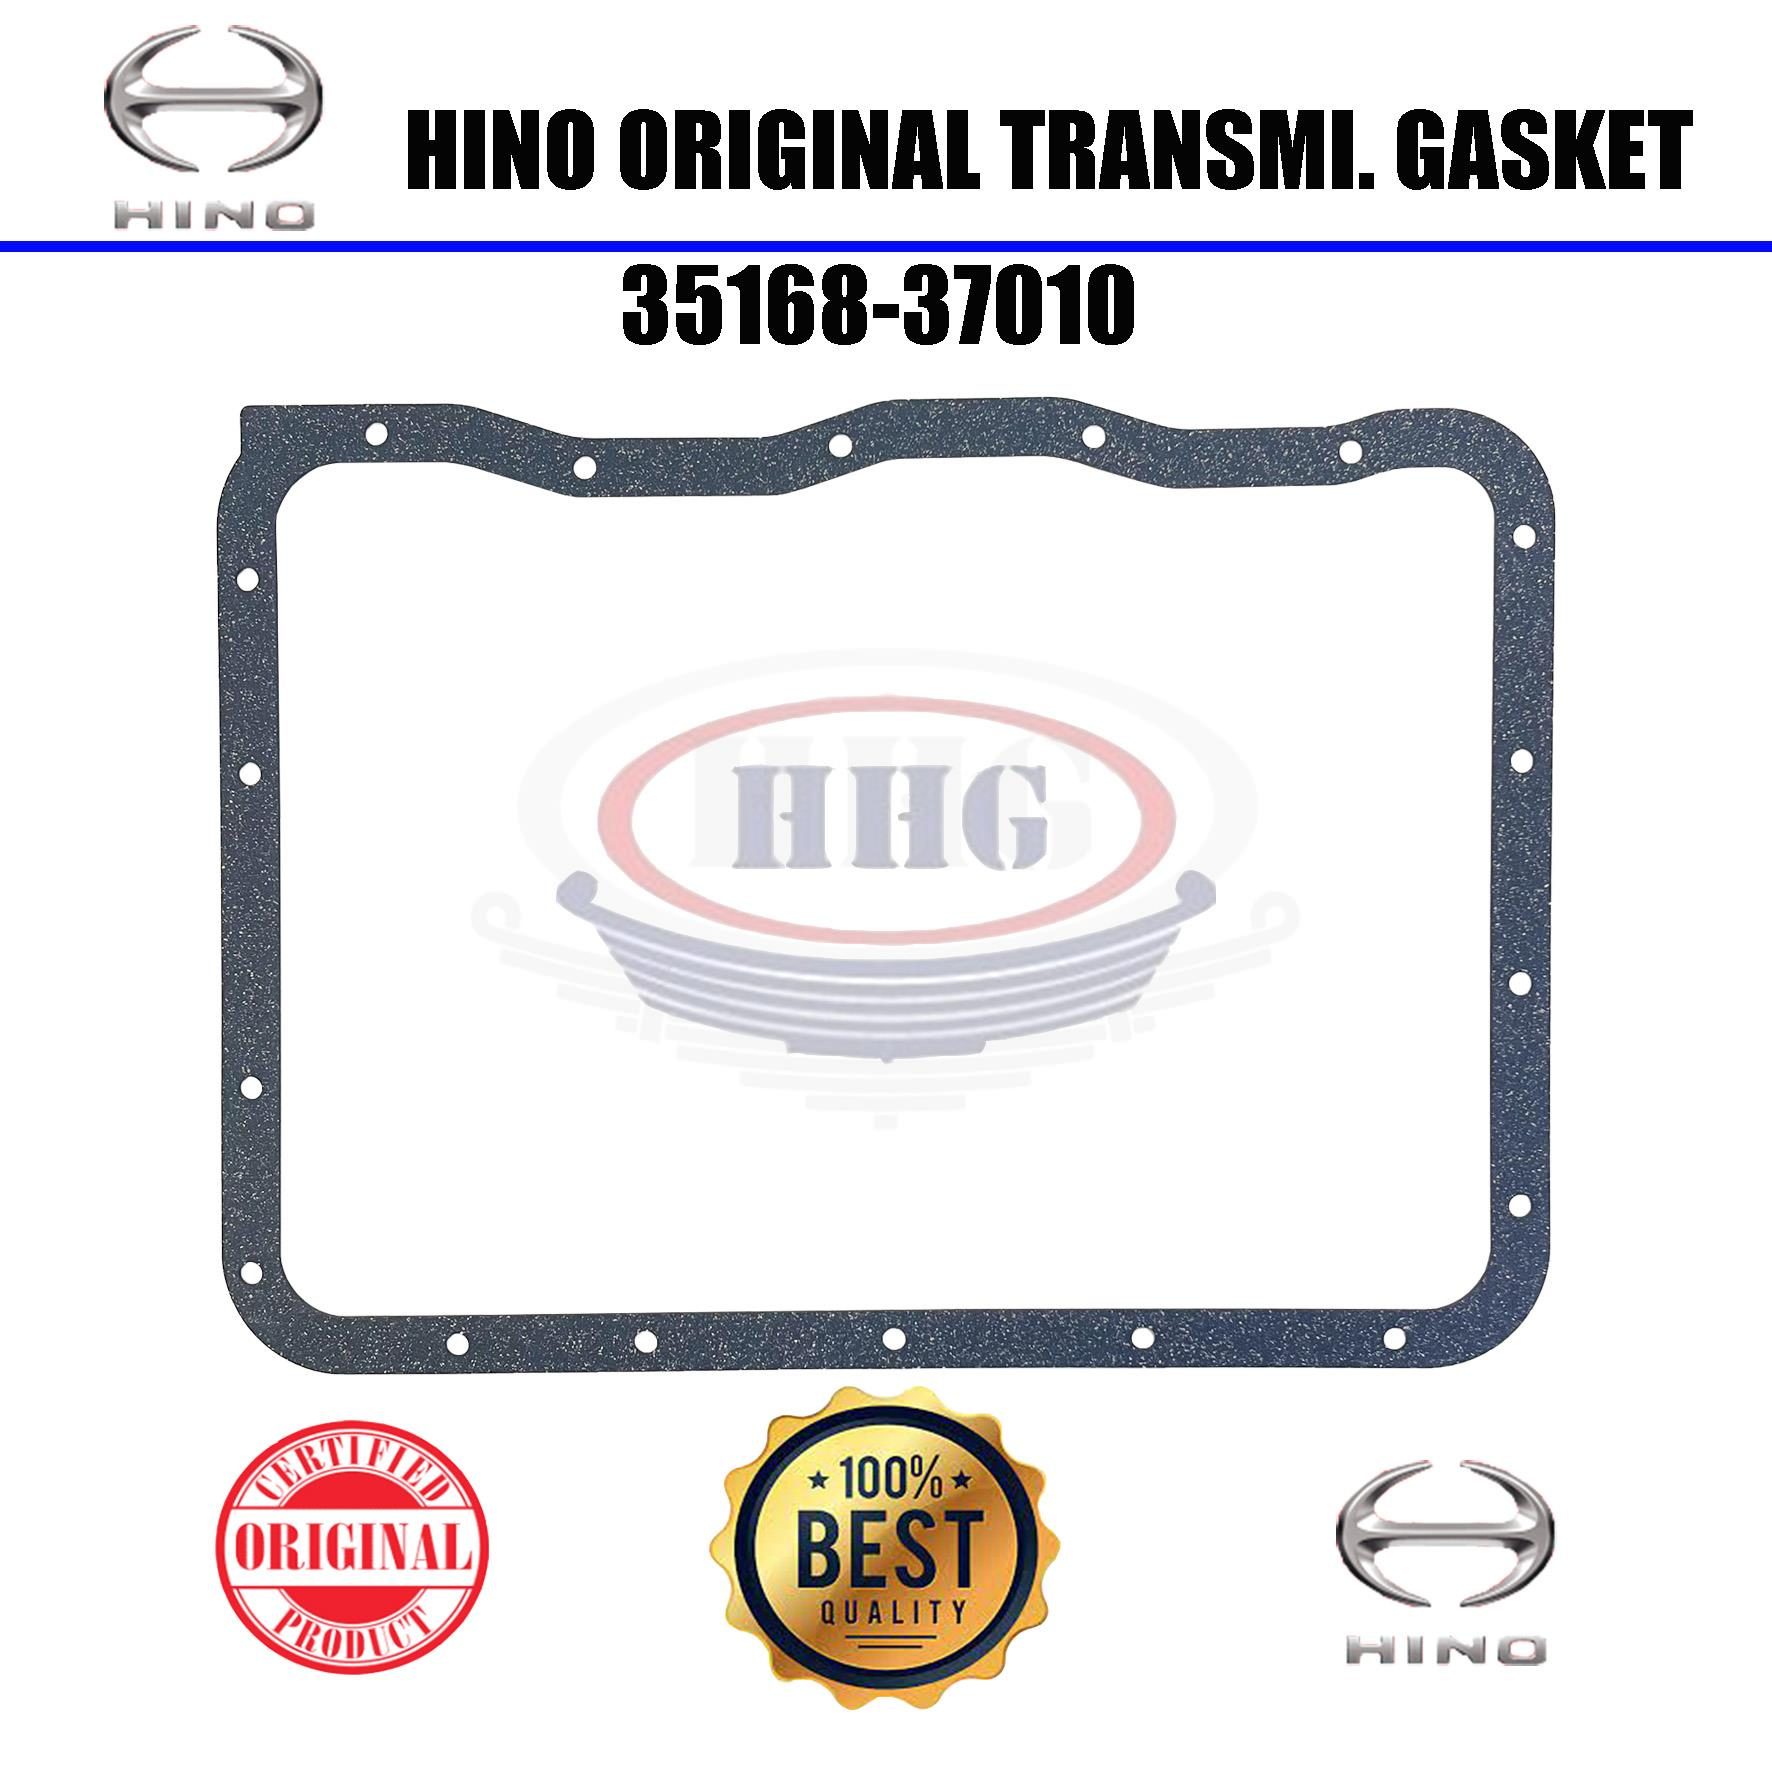 Hino Original XZU710 Transmission Gasket (35168-37010)